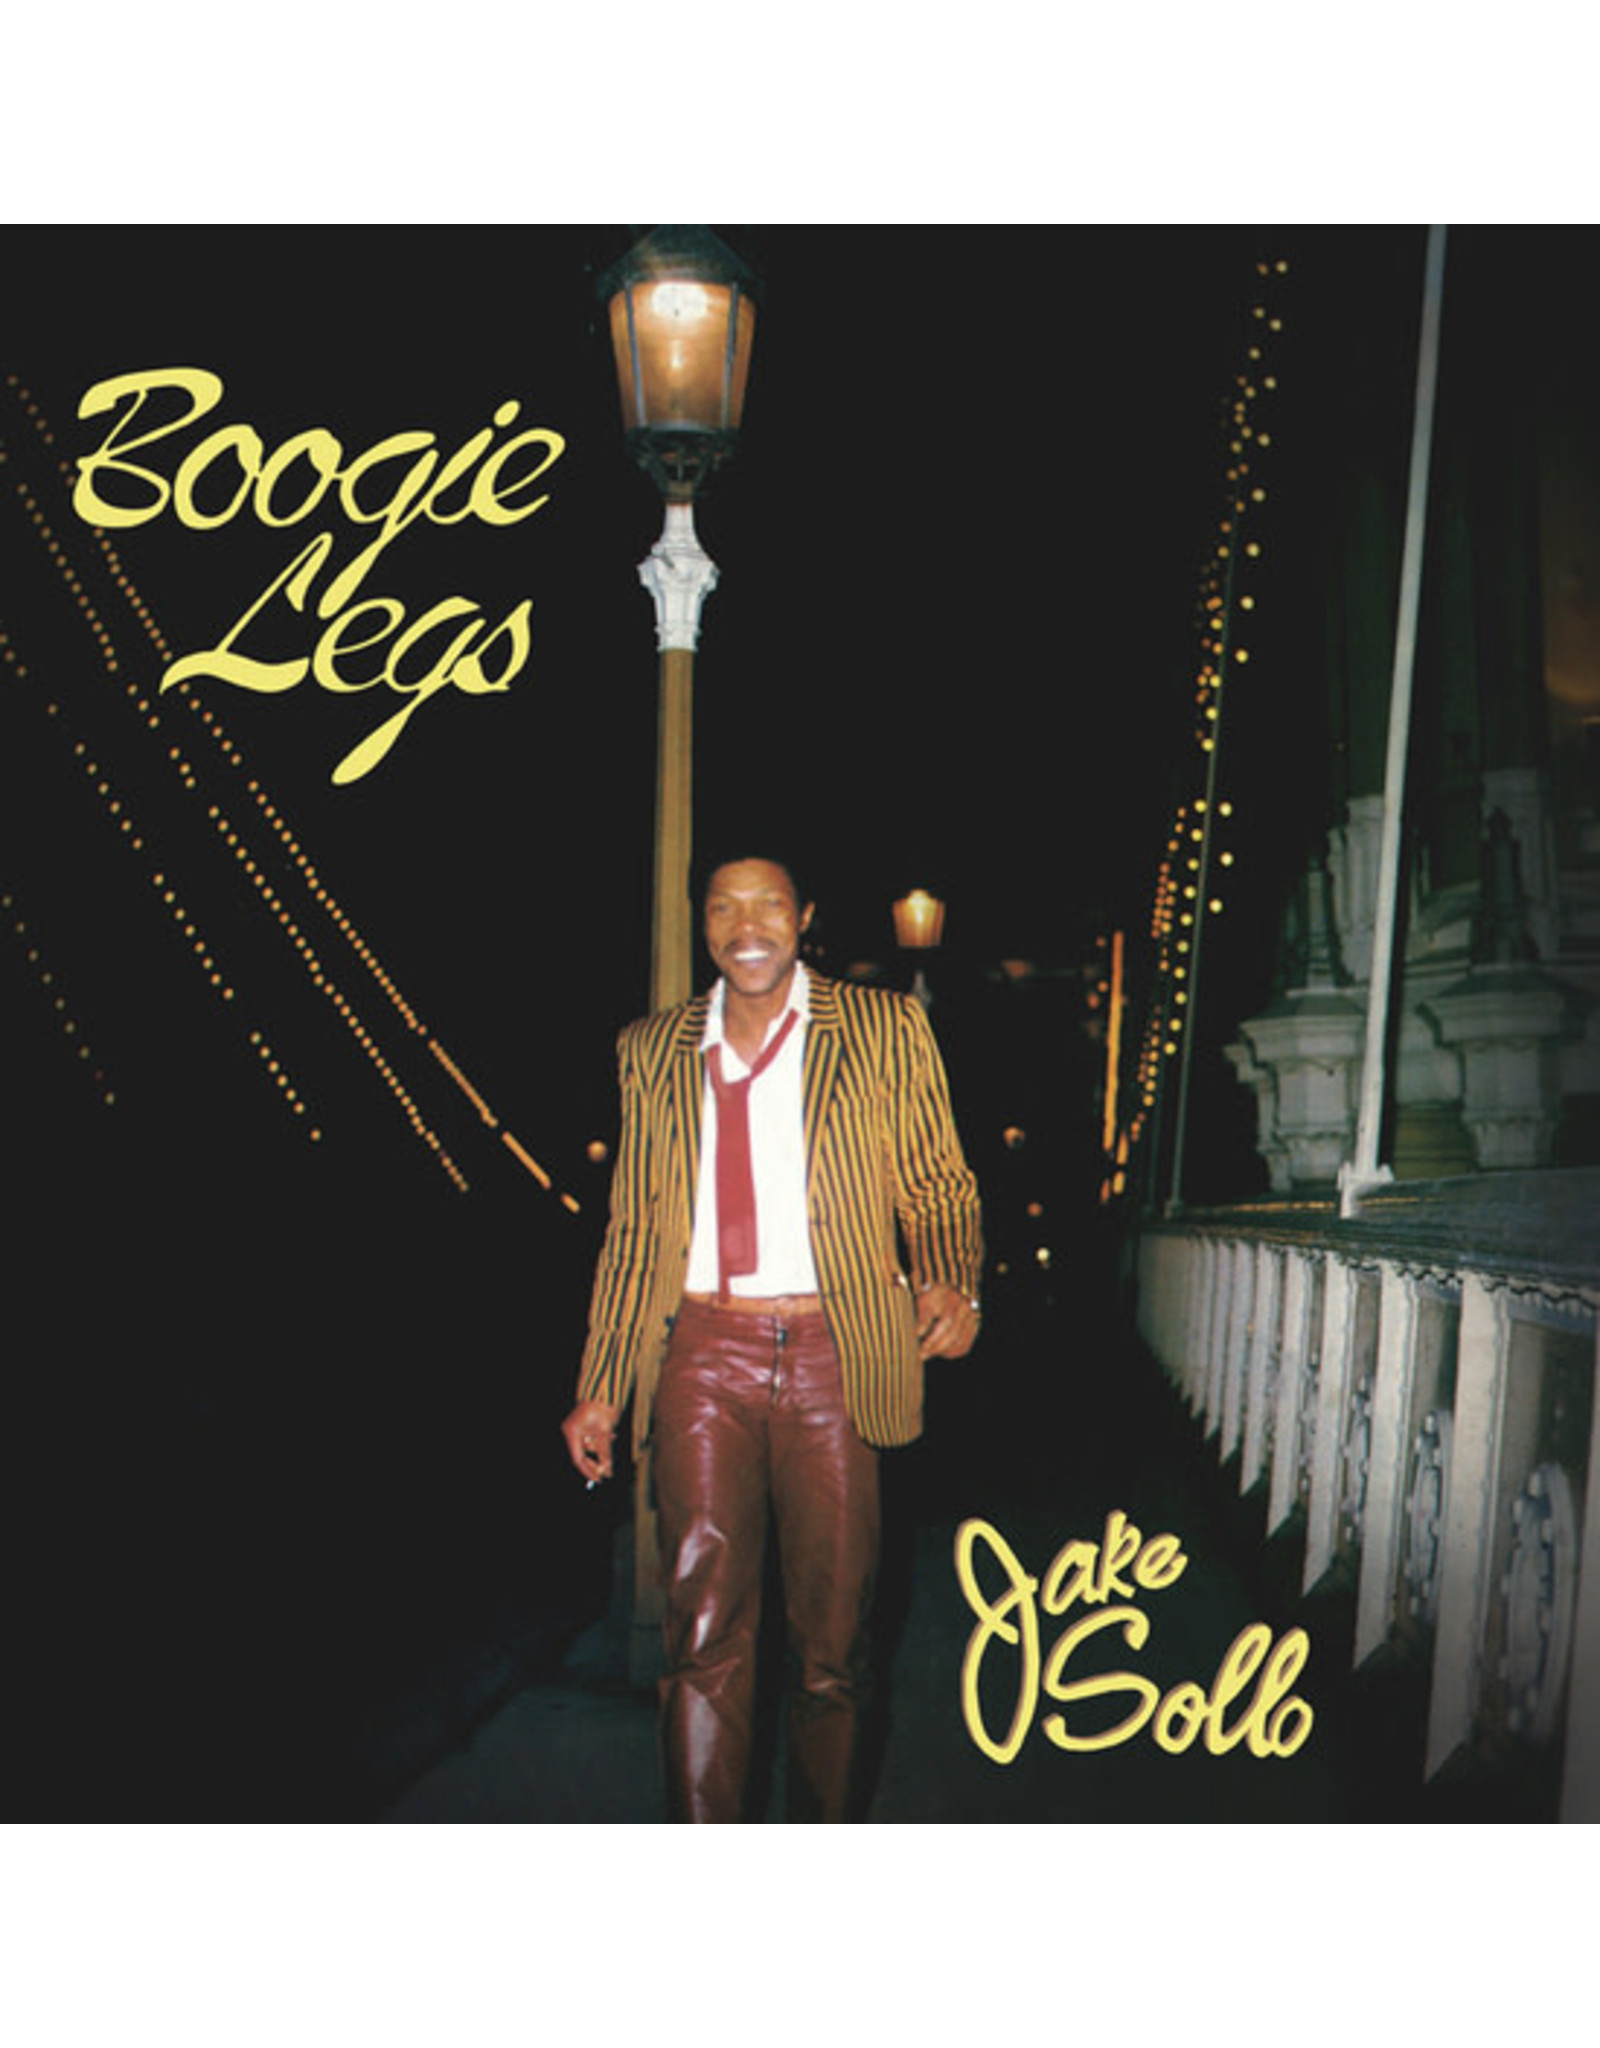 Tidal Wave Music Sollo, Jake: Boogie Legs LP